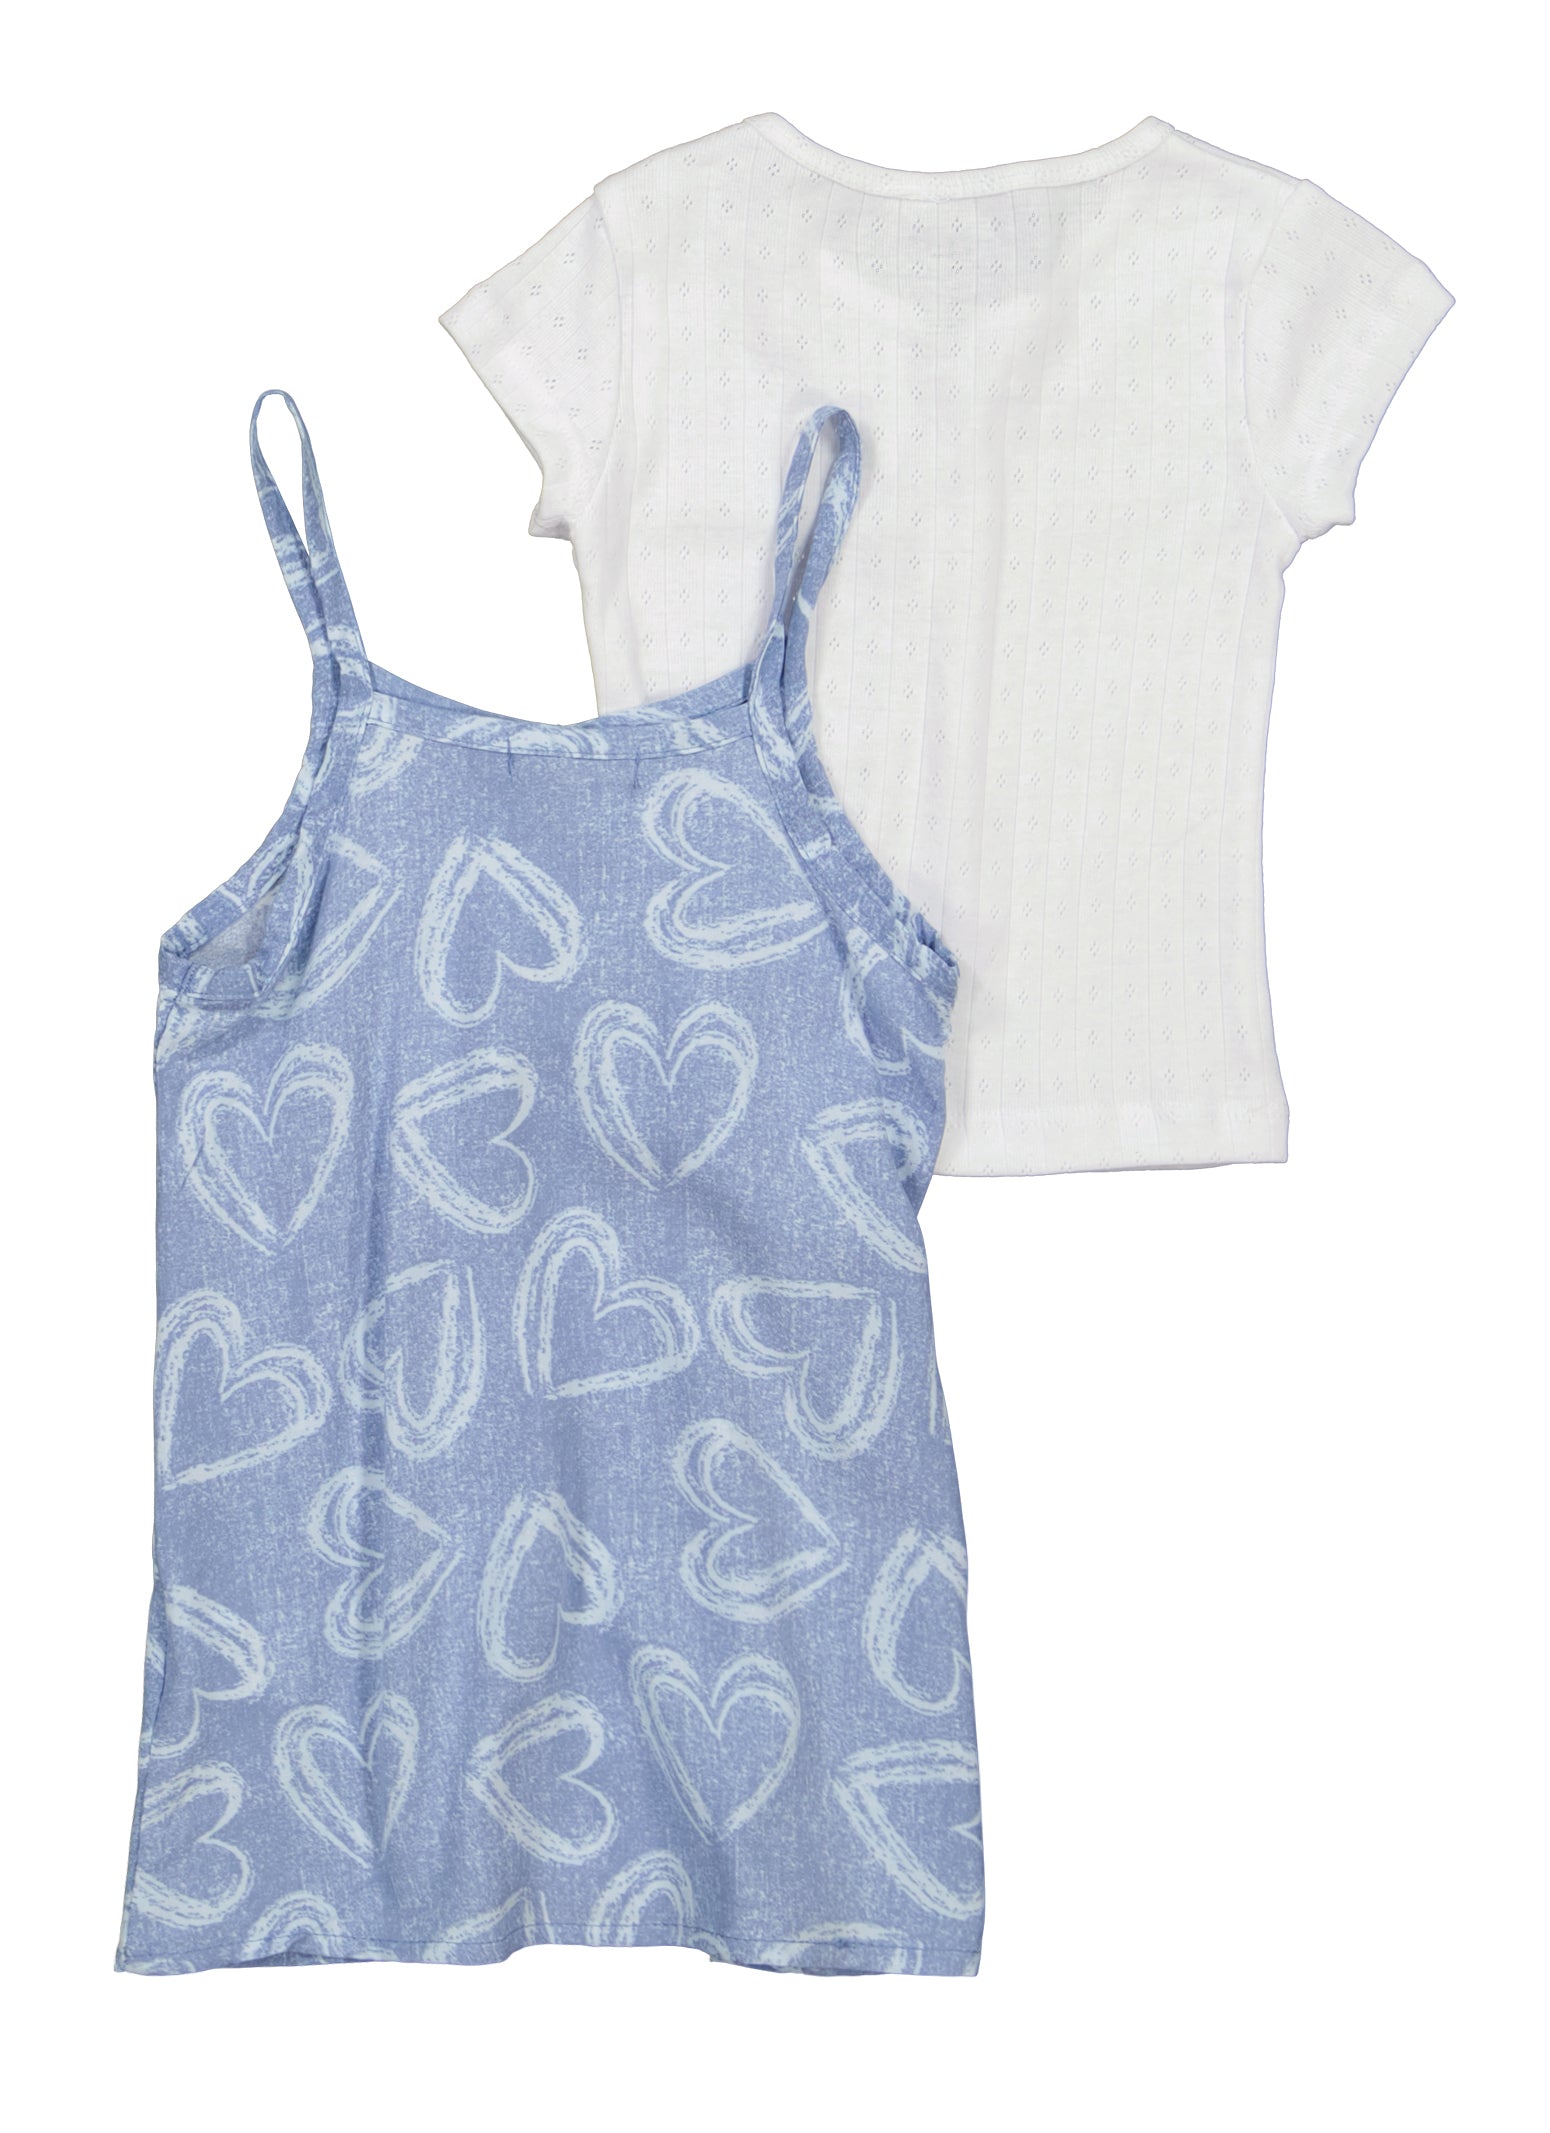 Toddler Girls Heart Print Cami Dress with Top - Medium Wash